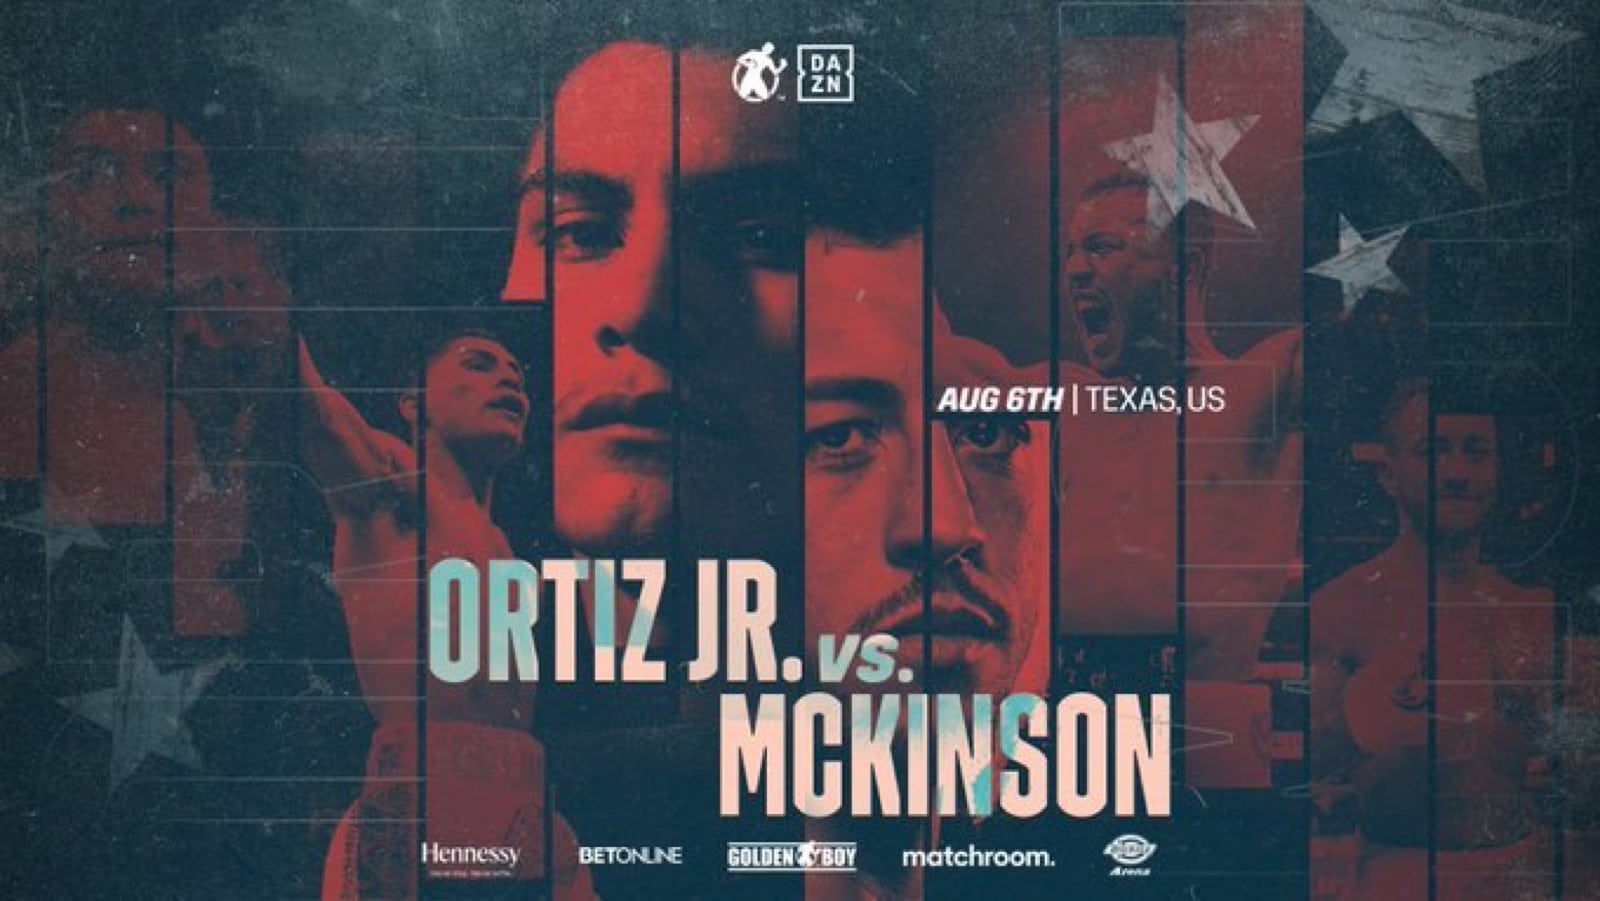 Vergil Ortiz Vs. Mckinson At Galen Center Aug 6 At Dickies Arena In Fort Worth, TX